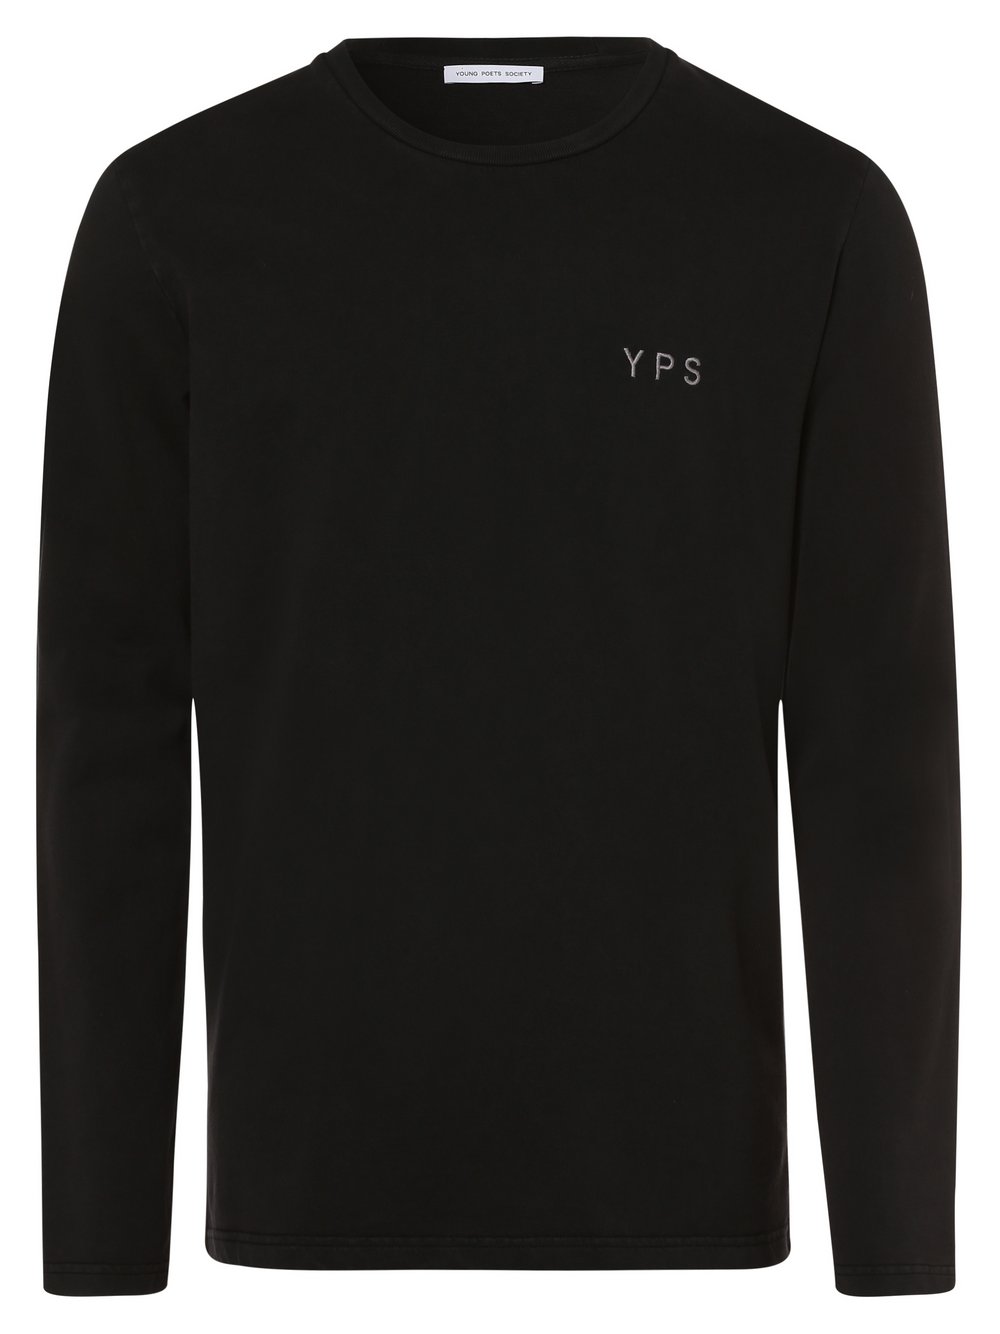 YPS - Męska bluza nierozpinana – Lio, czarny